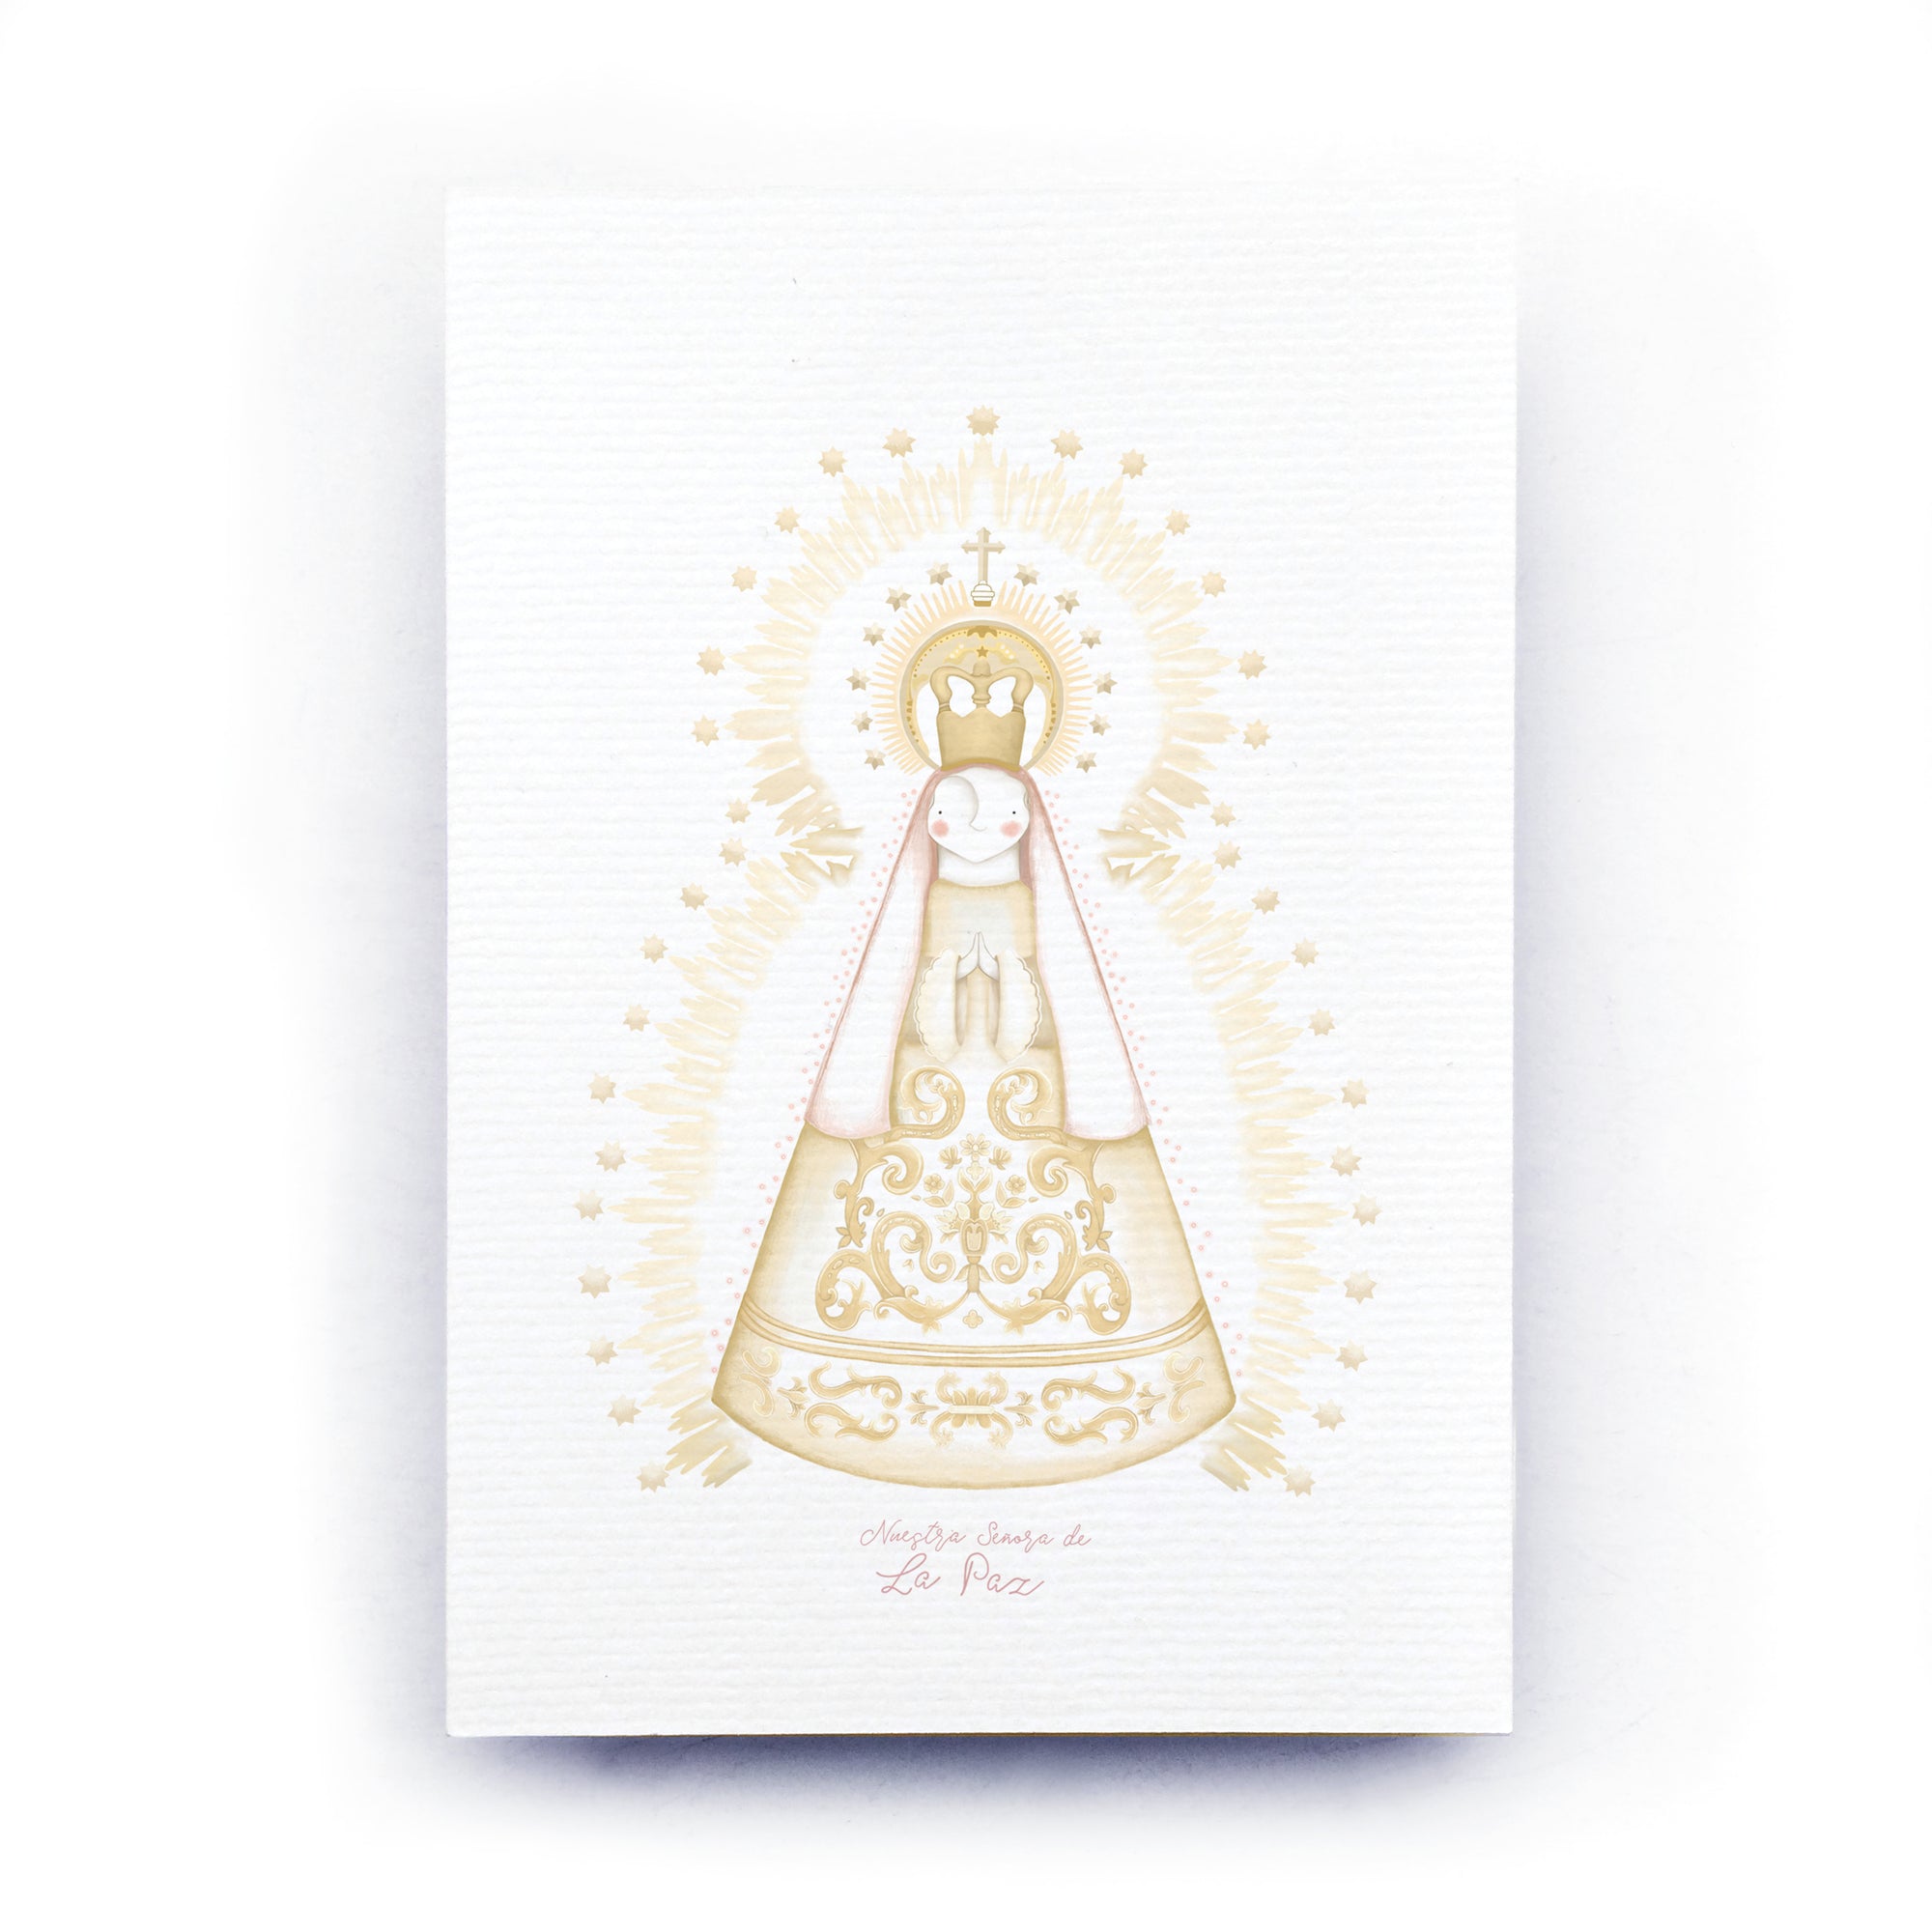 Lámina Nuestra Señora de La Paz